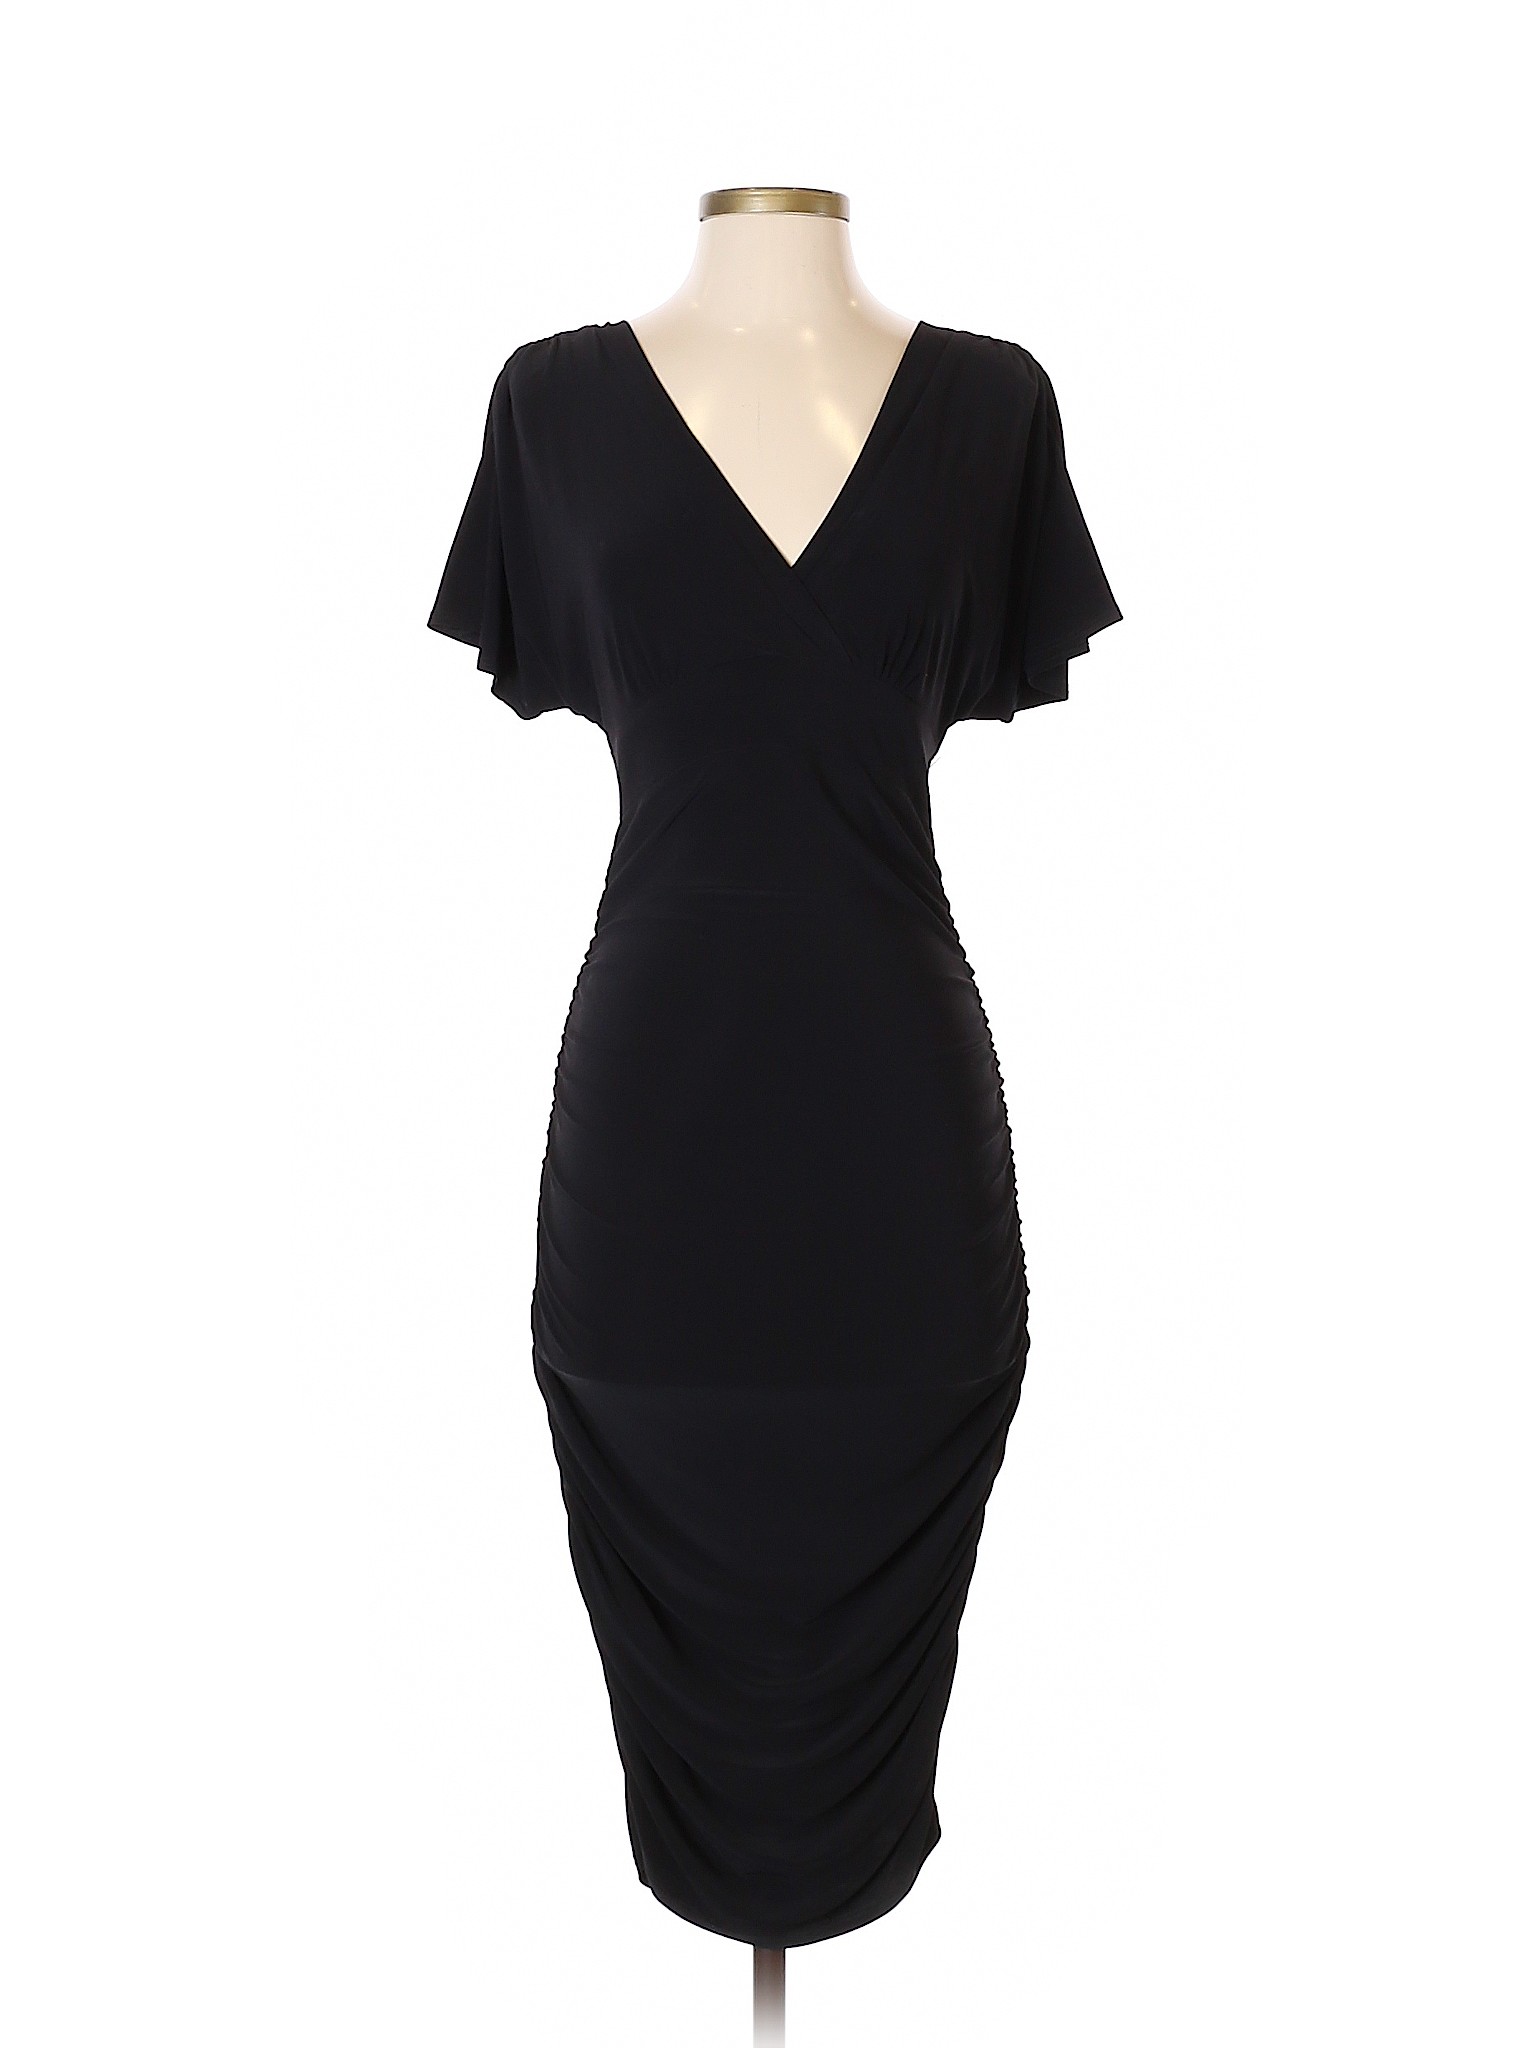 Frank Lyman Design Women Black Cocktail Dress 2 | eBay